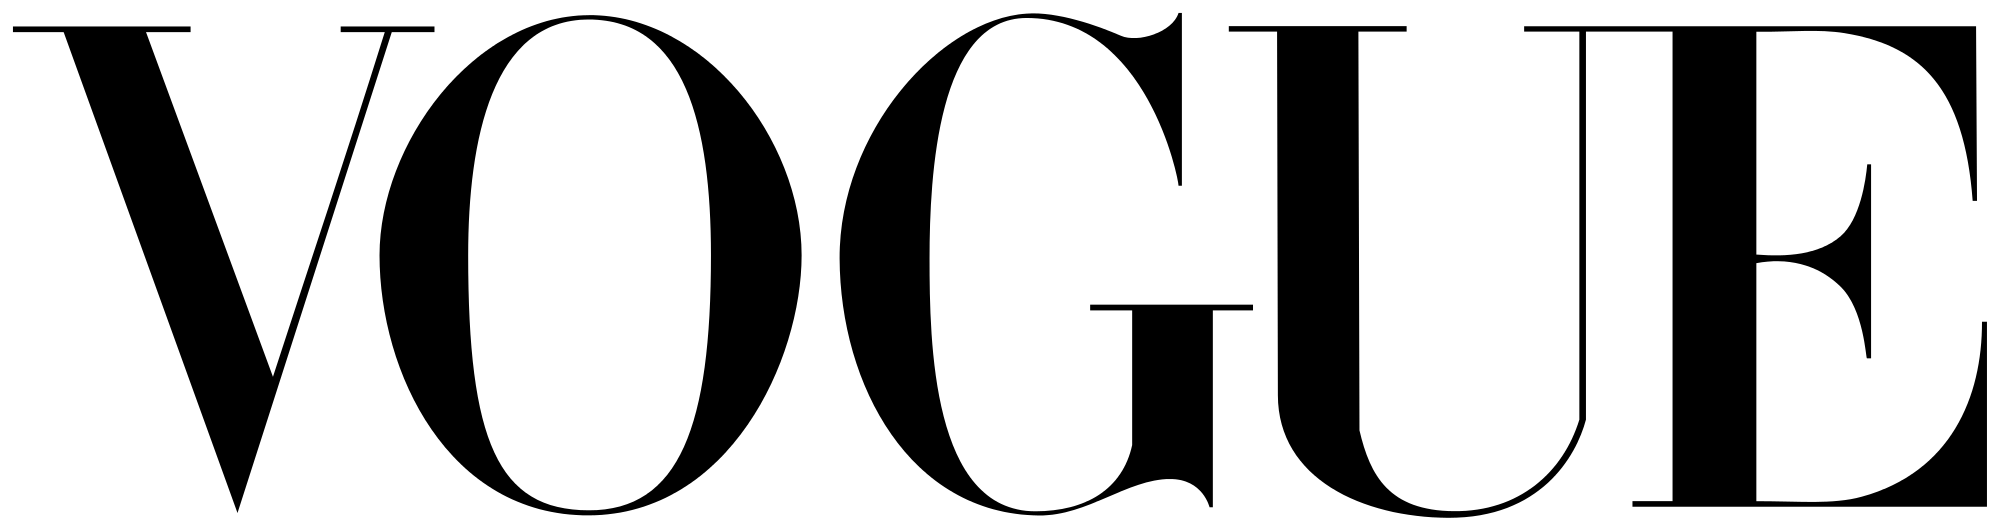 Vogue Logo - File:VOGUE LOGO.svg - Wikimedia Commons